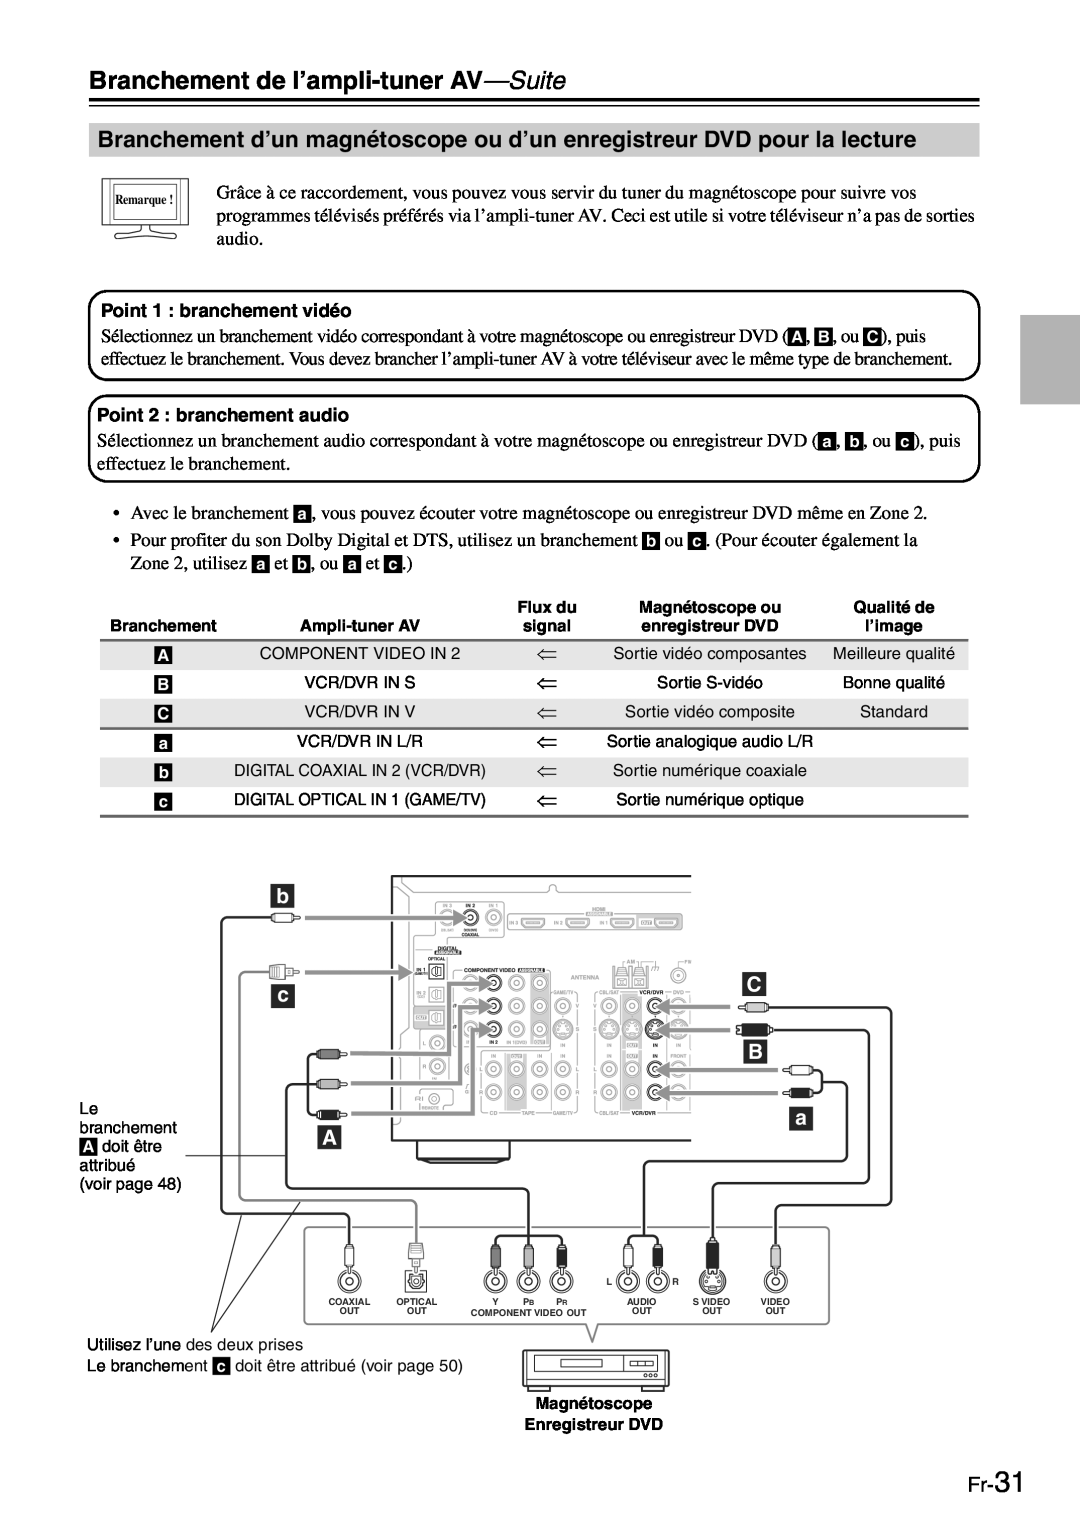 Onkyo TX-SR705 manual Fr-31, Branchement de l’ampli-tuner AV—Suite, Magnétoscope Enregistreur DVD 